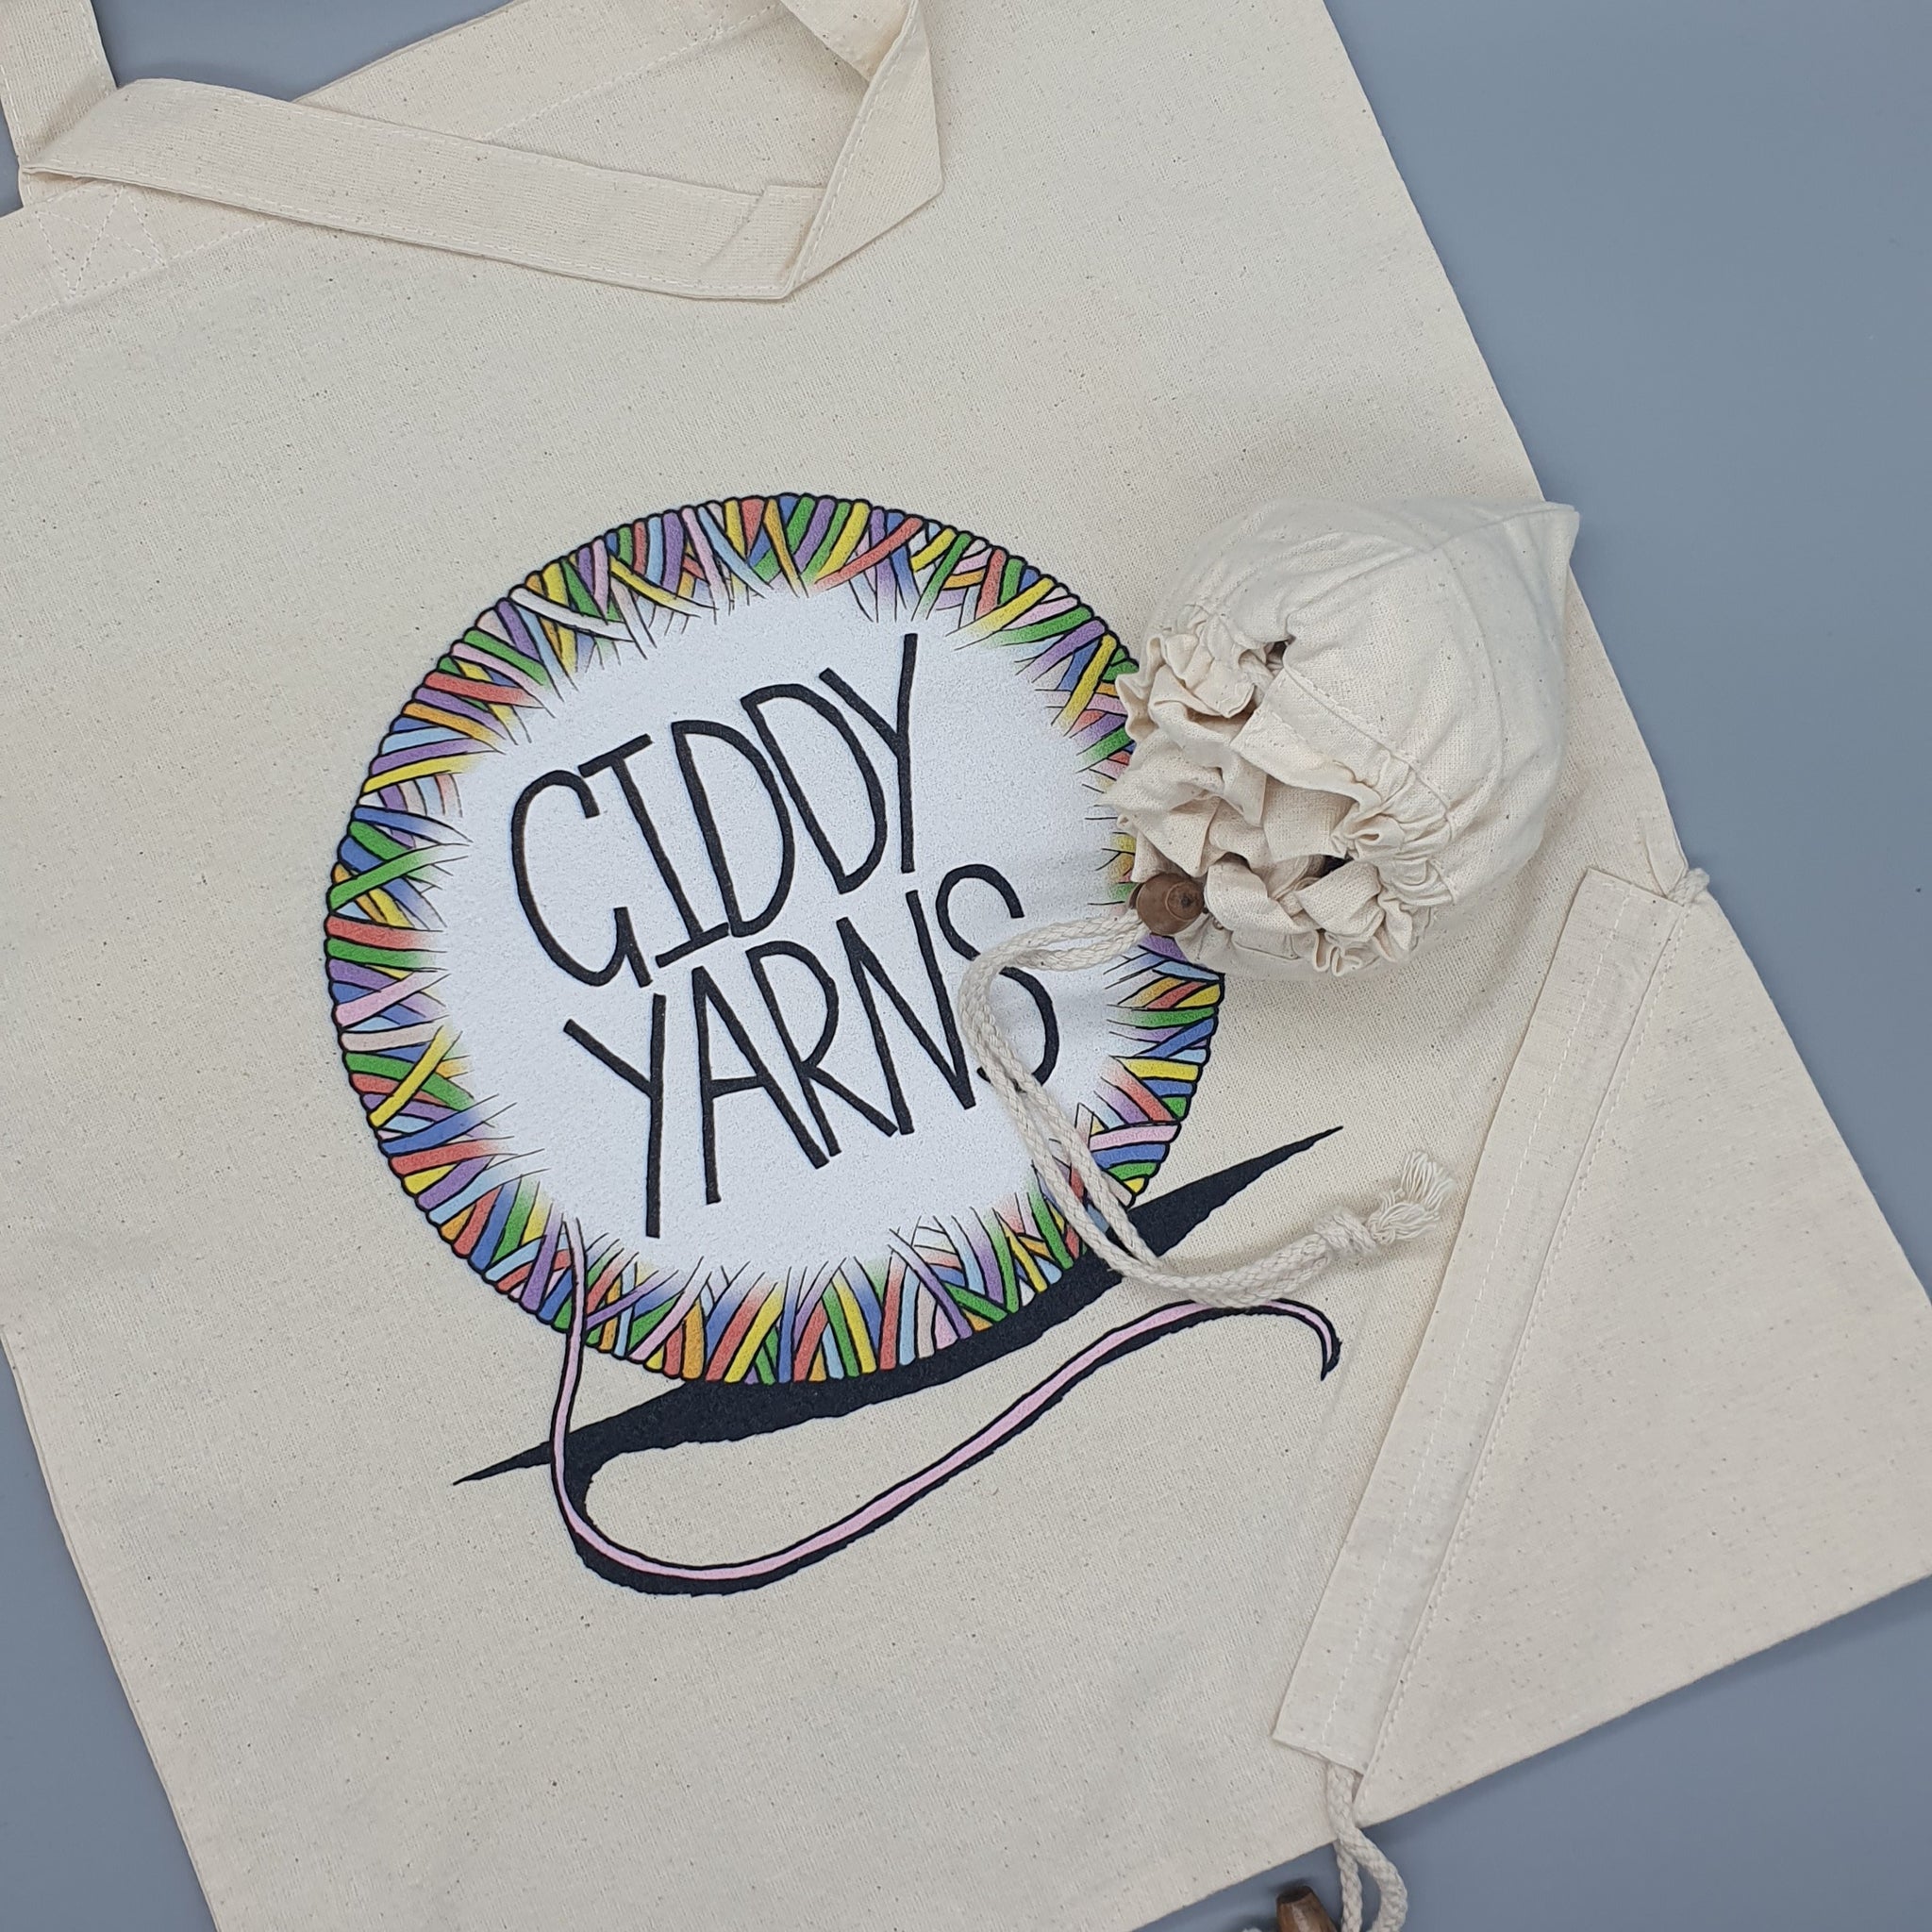 Giddy Yarns Pack-Away Tote Bag